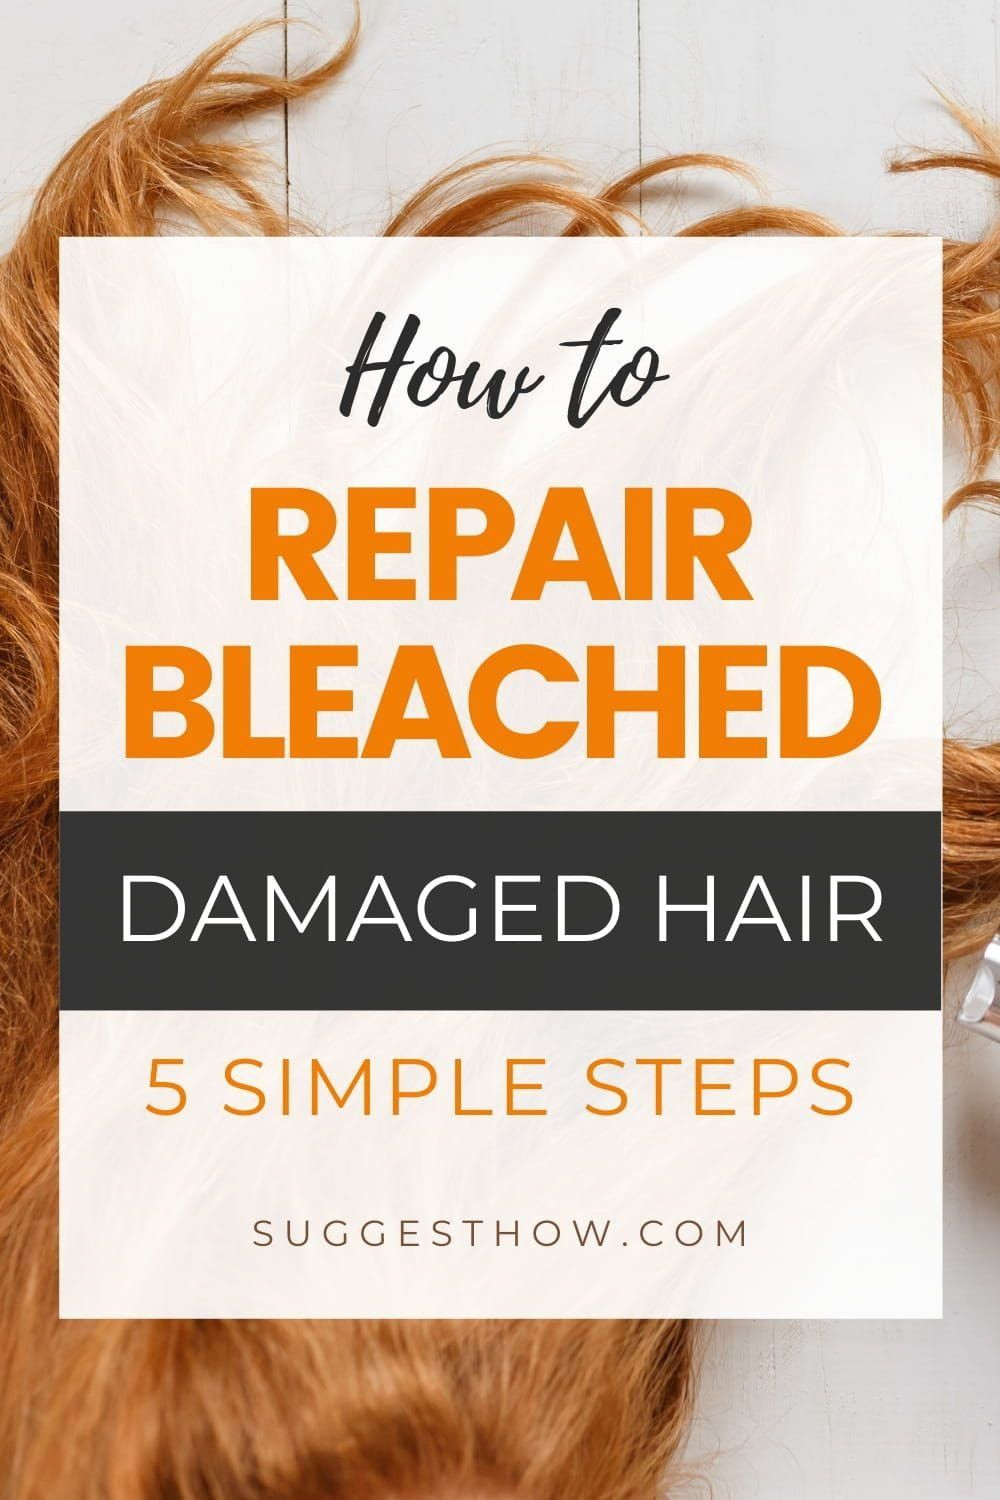 DIY Hair Mask For Bleached Hair
 How to Repair Bleached Damaged Hair DIY